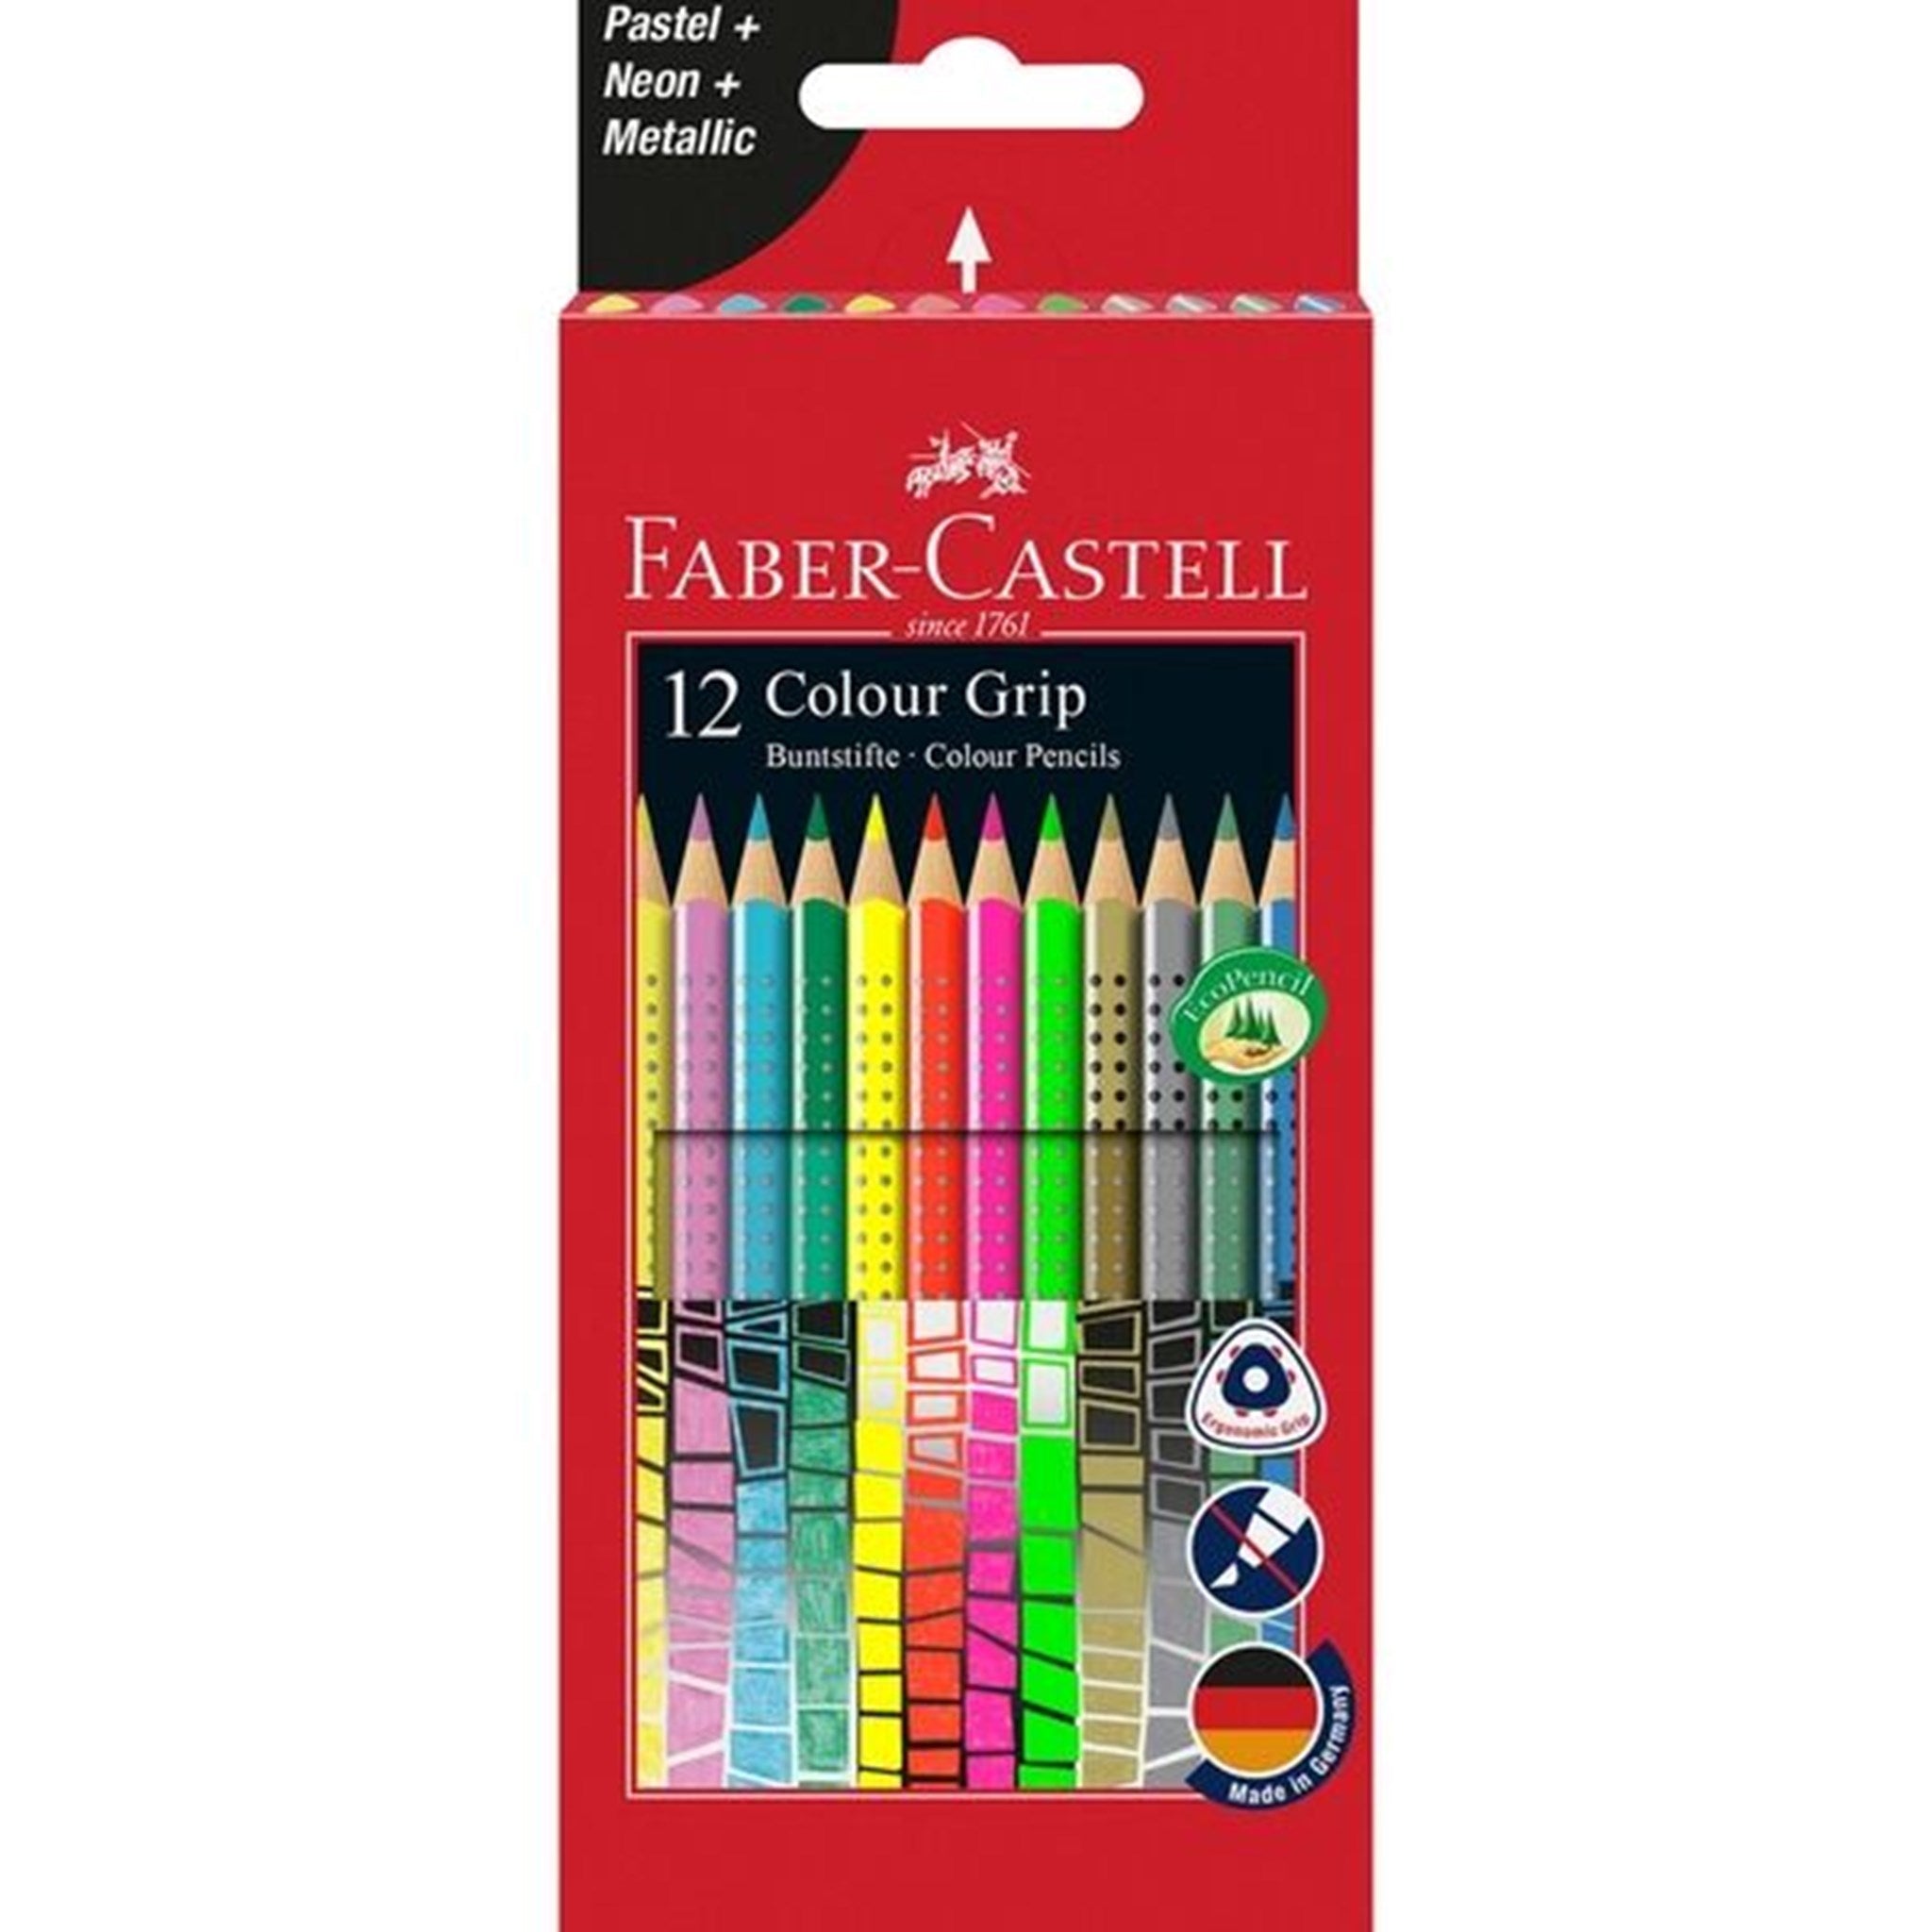 Faber Castell Grip 2001 Pastel, Neon, Metallic 12 Pencils